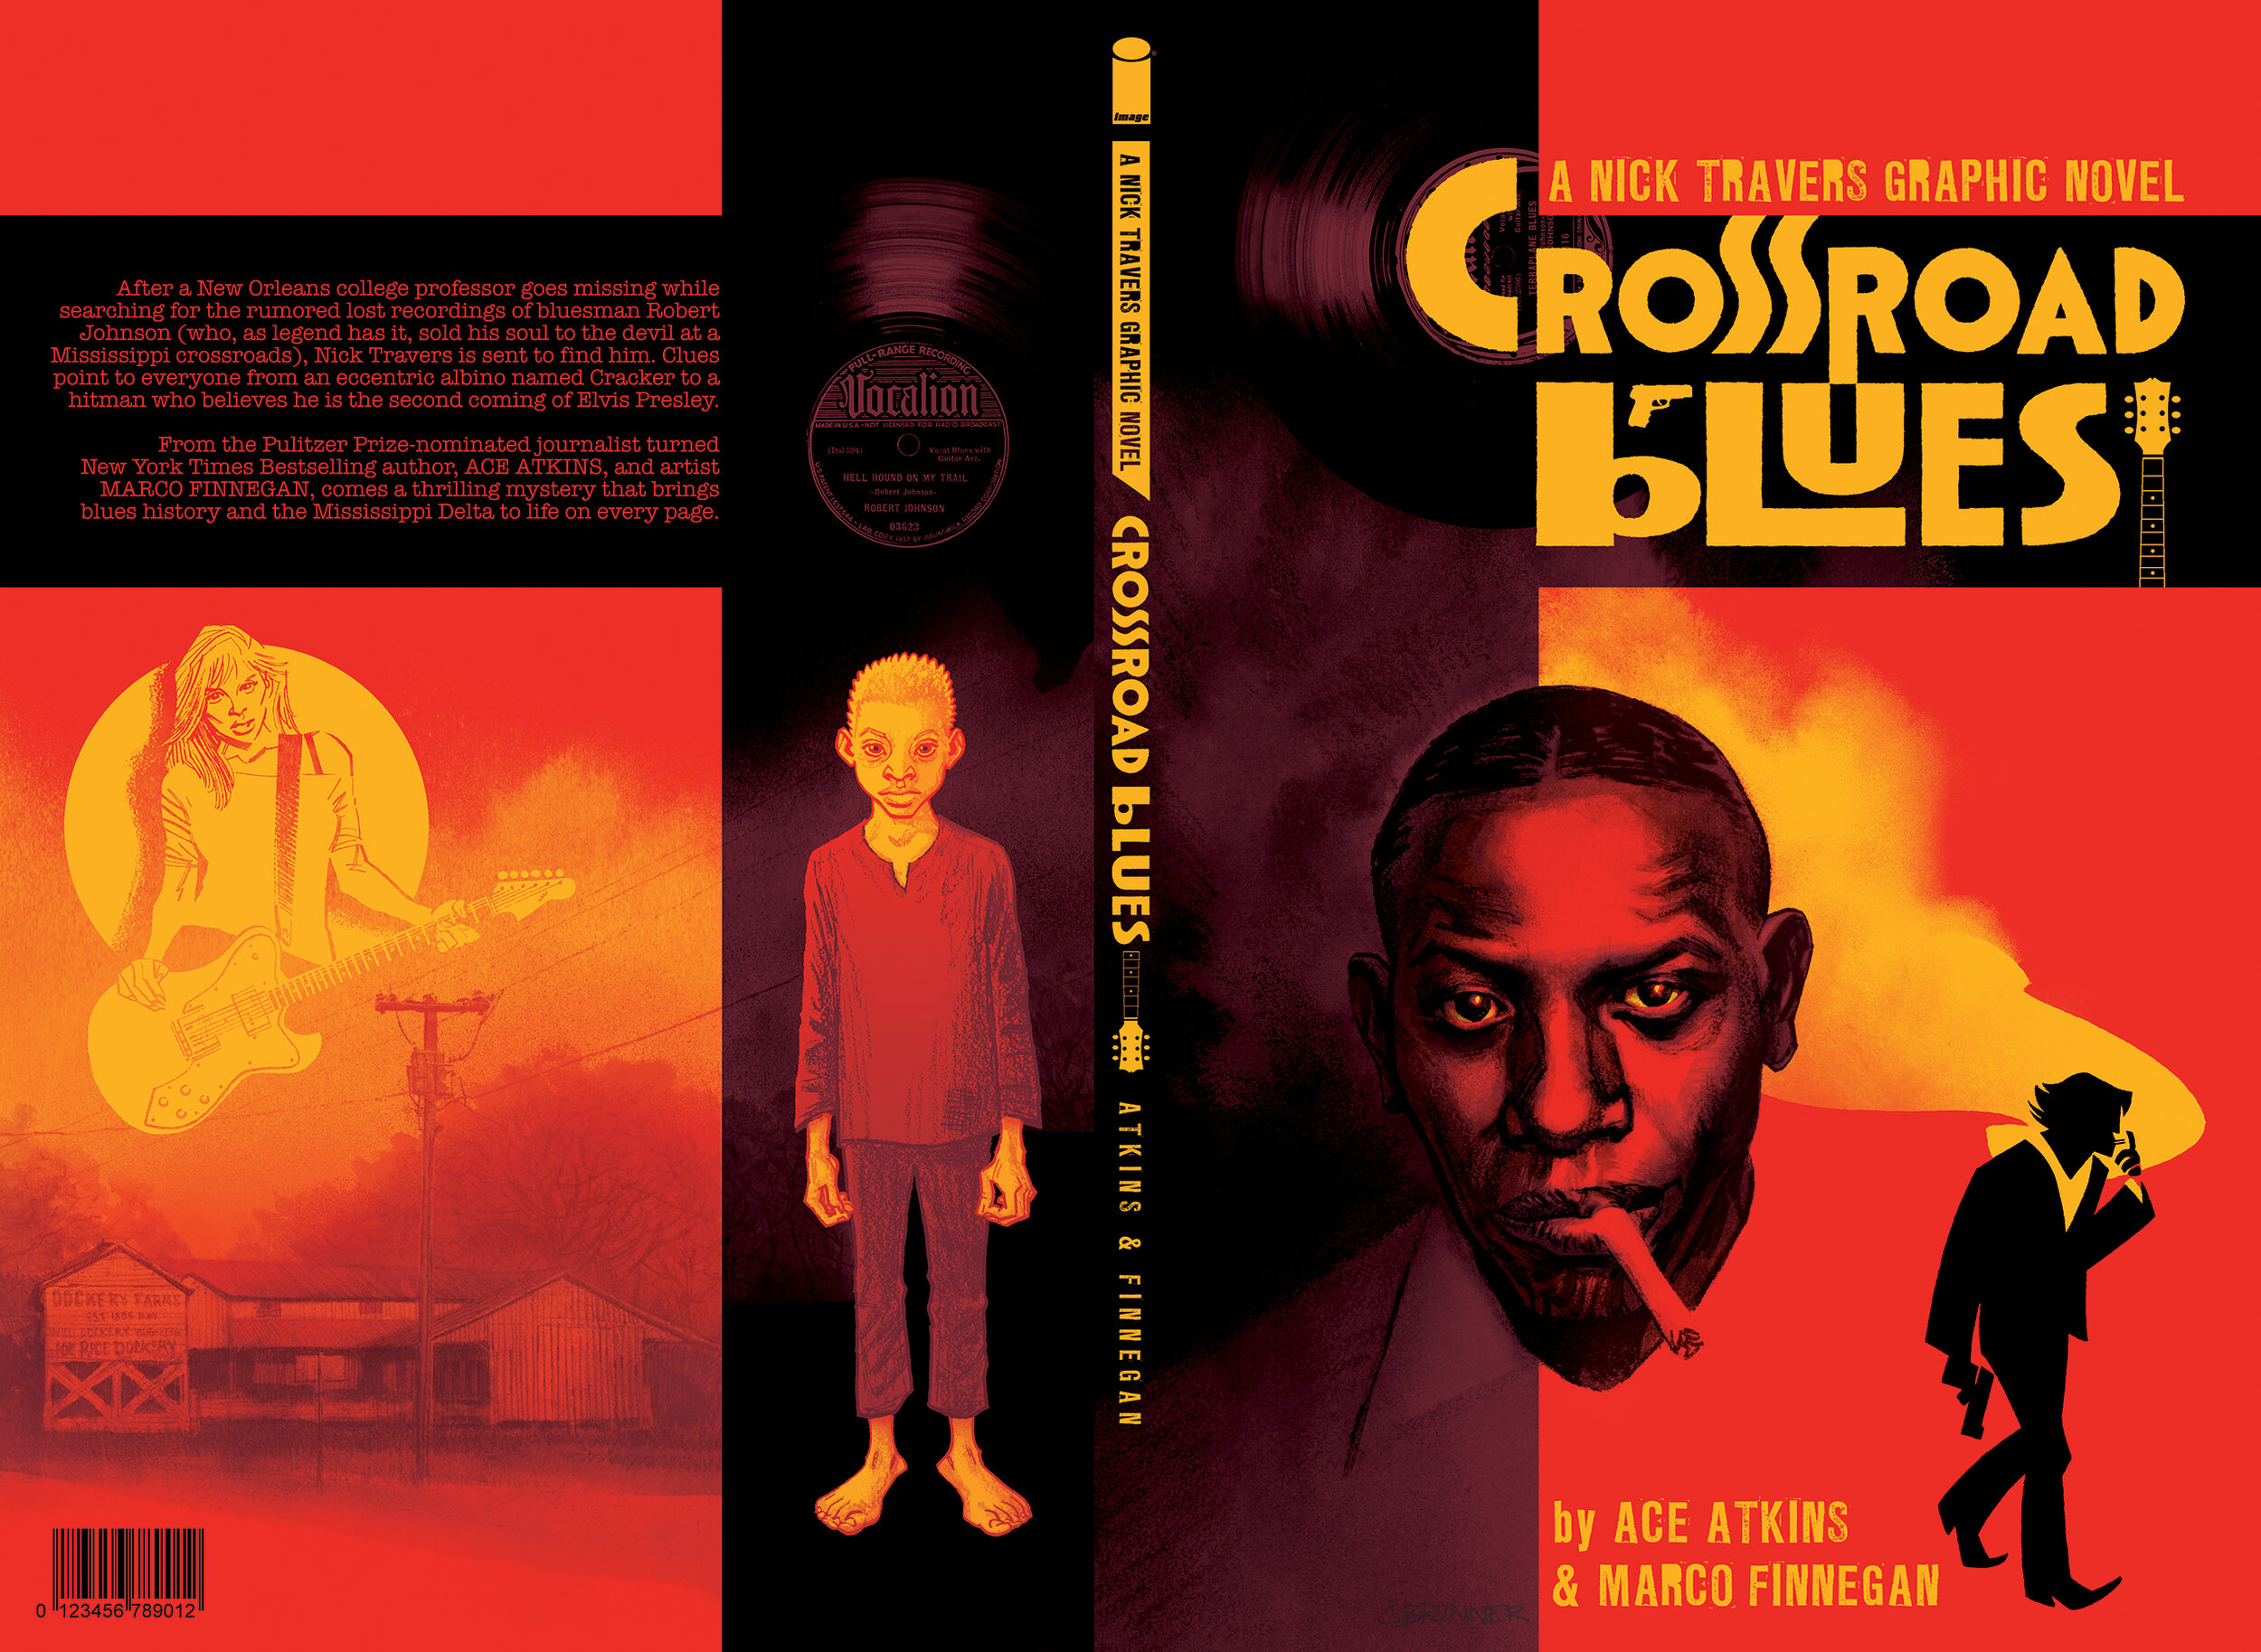 Crossroad Blues graphic novel adaptation